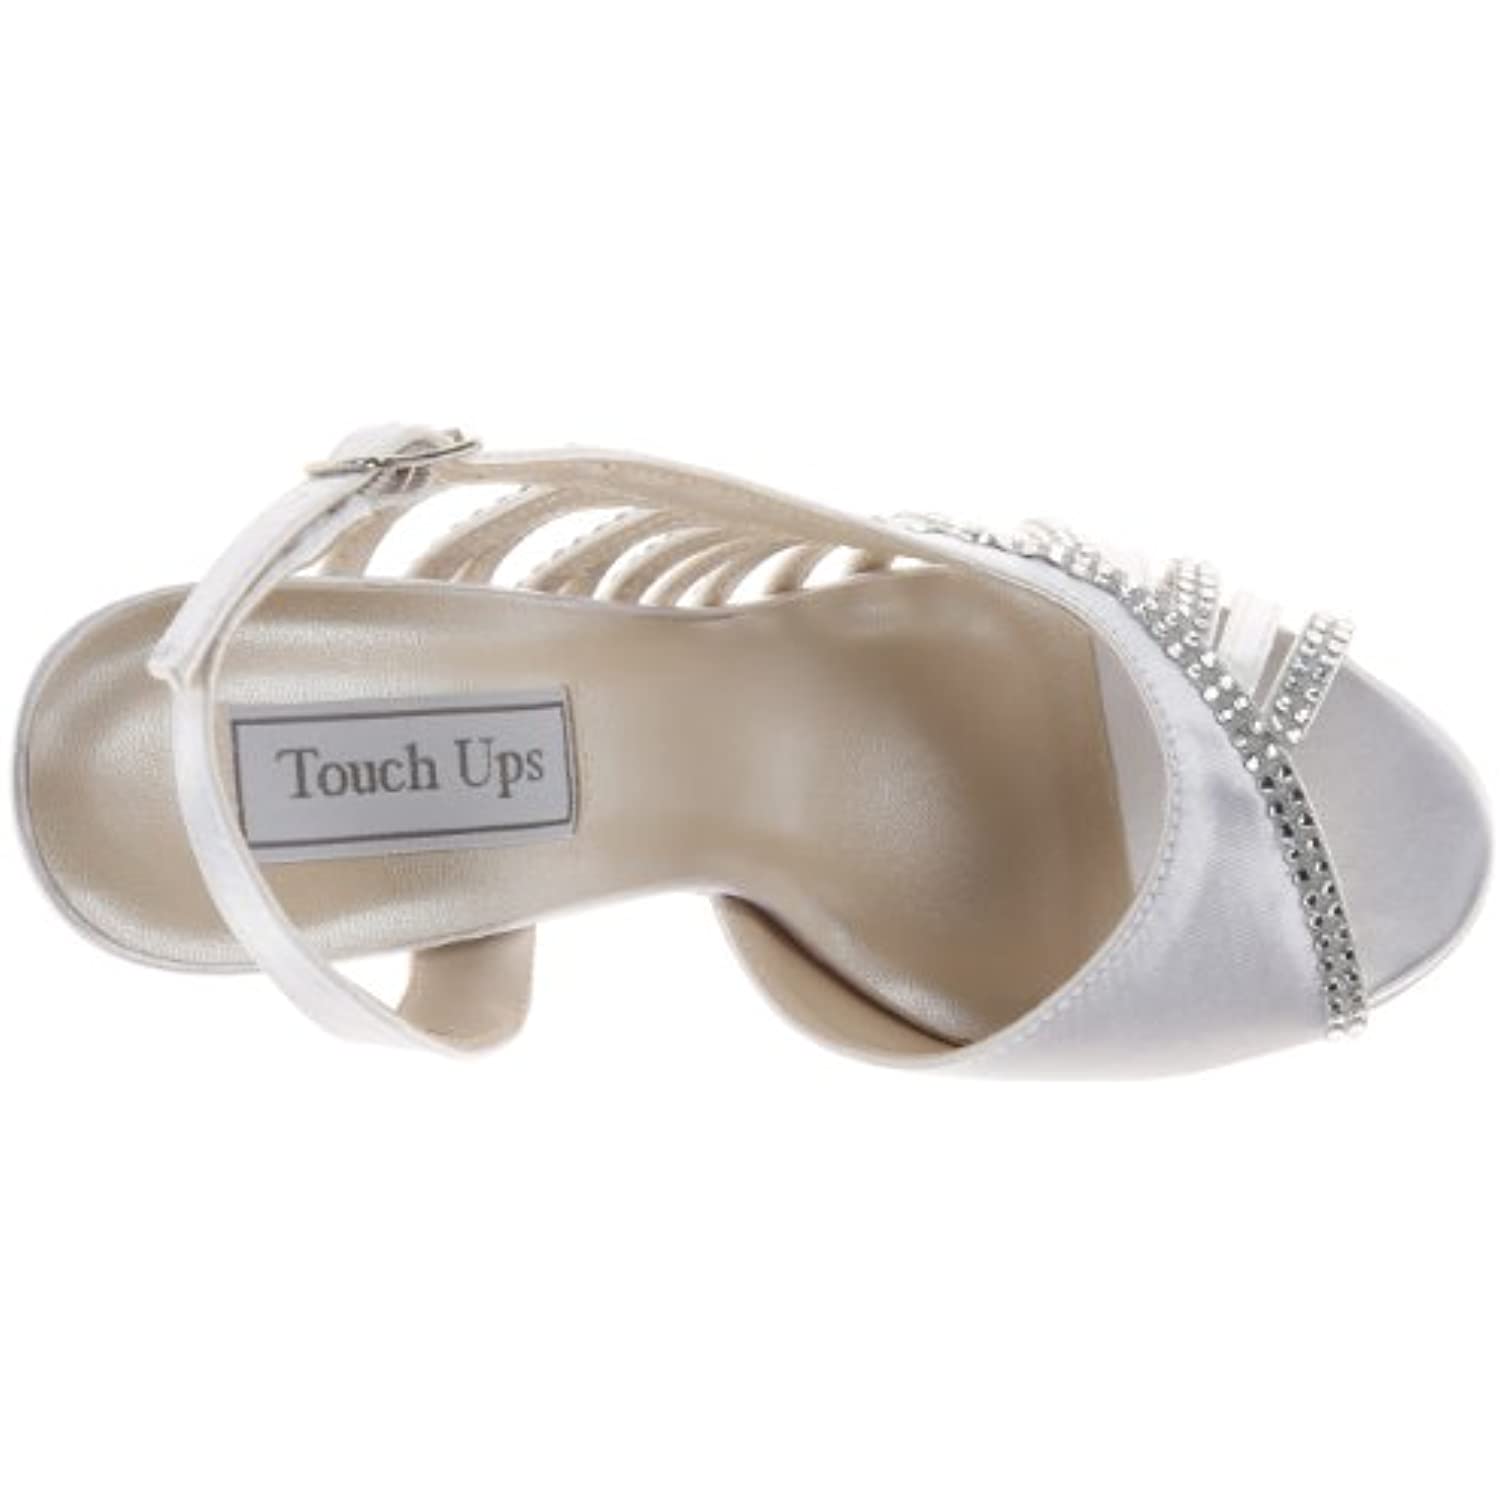 Touch Ups Women's Maureen Platform Sandal,White Satin,5.5 M US